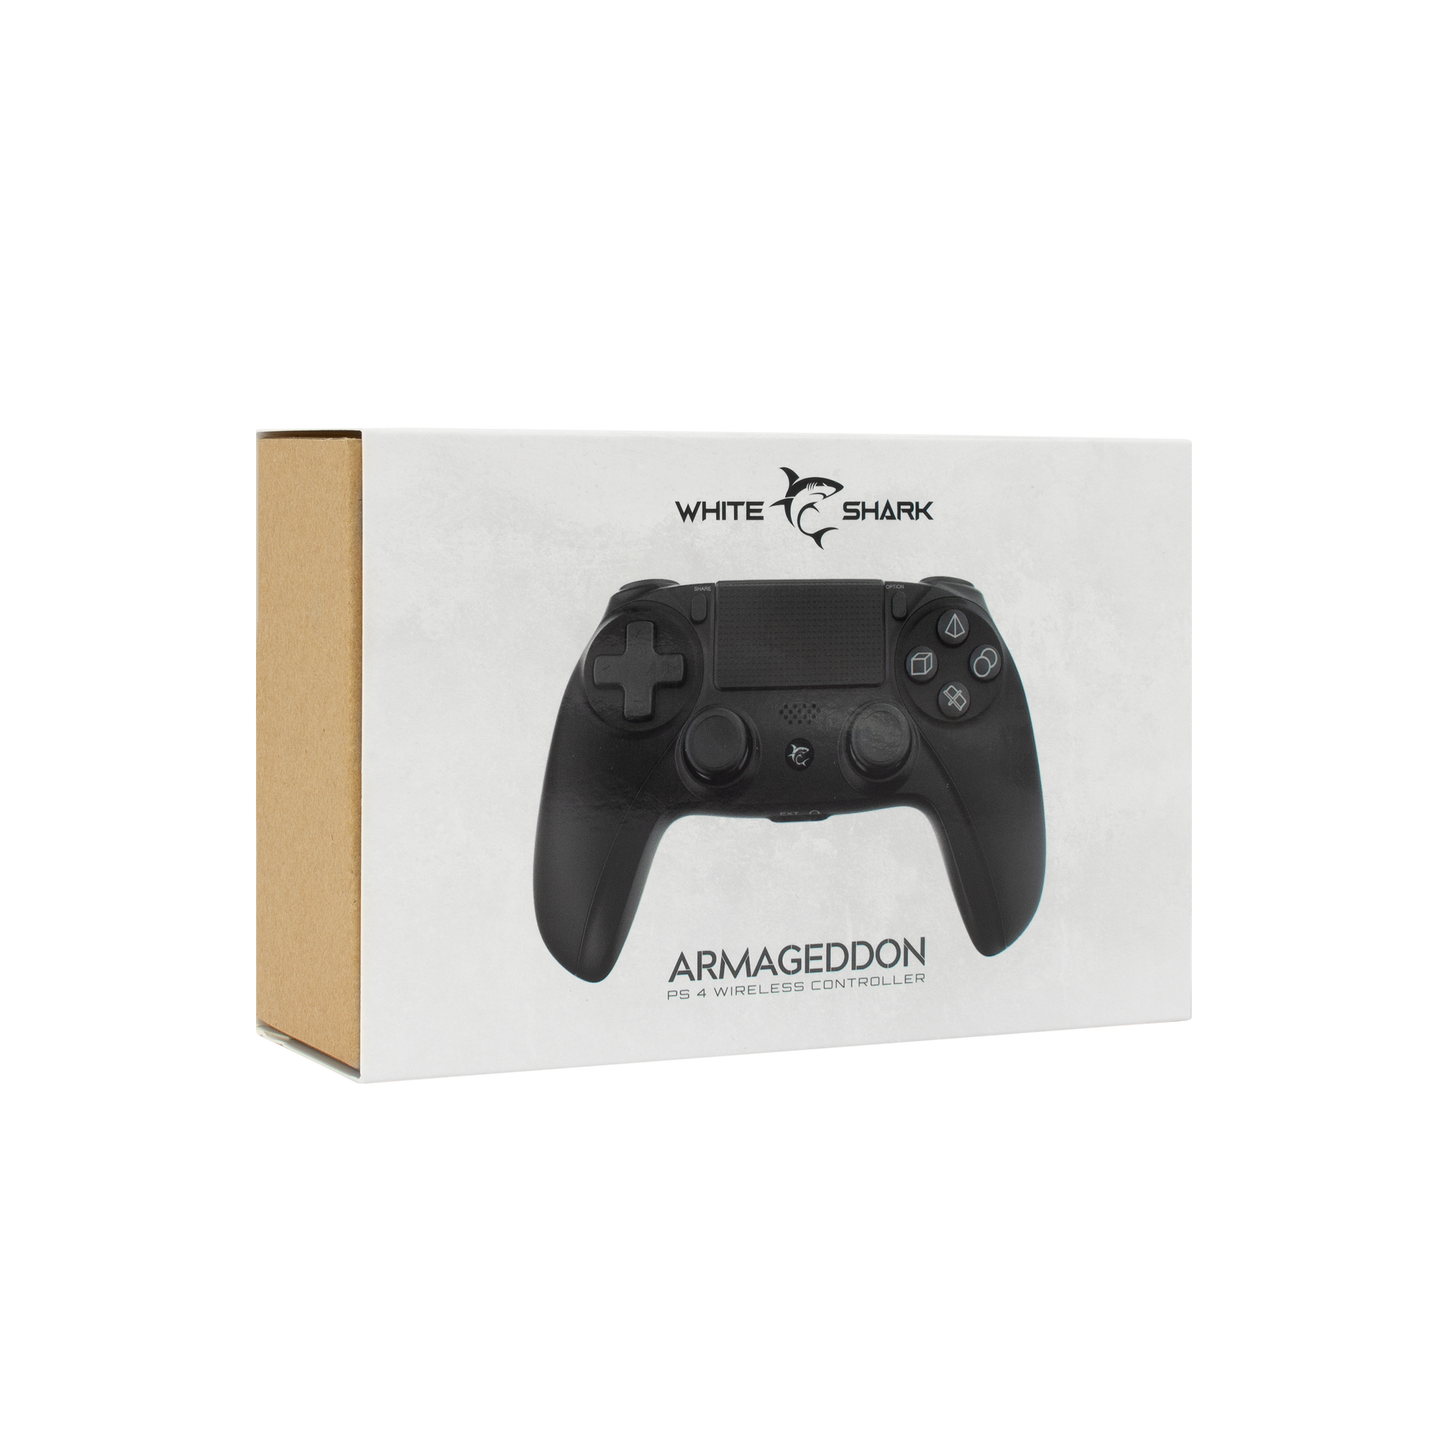 ARMAGEDDON - PS3/PS4 Controller